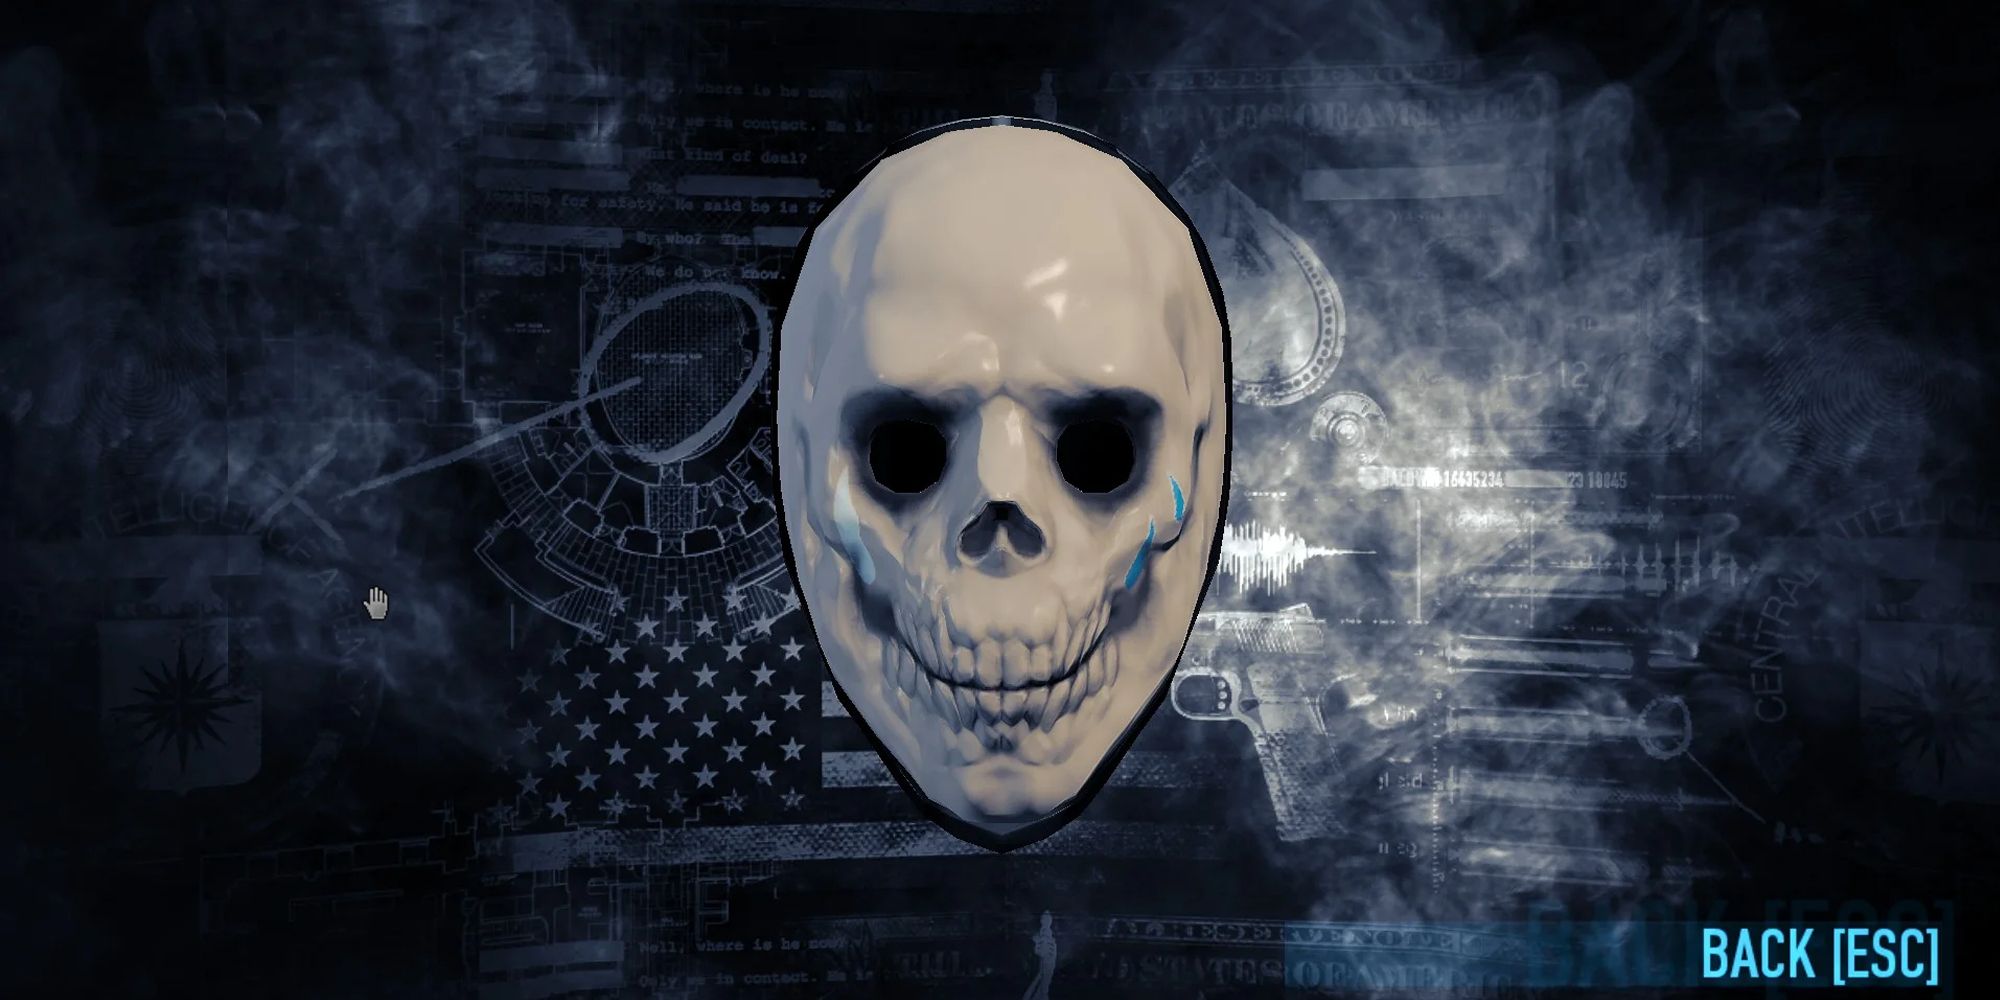 The Classic Skull Mask